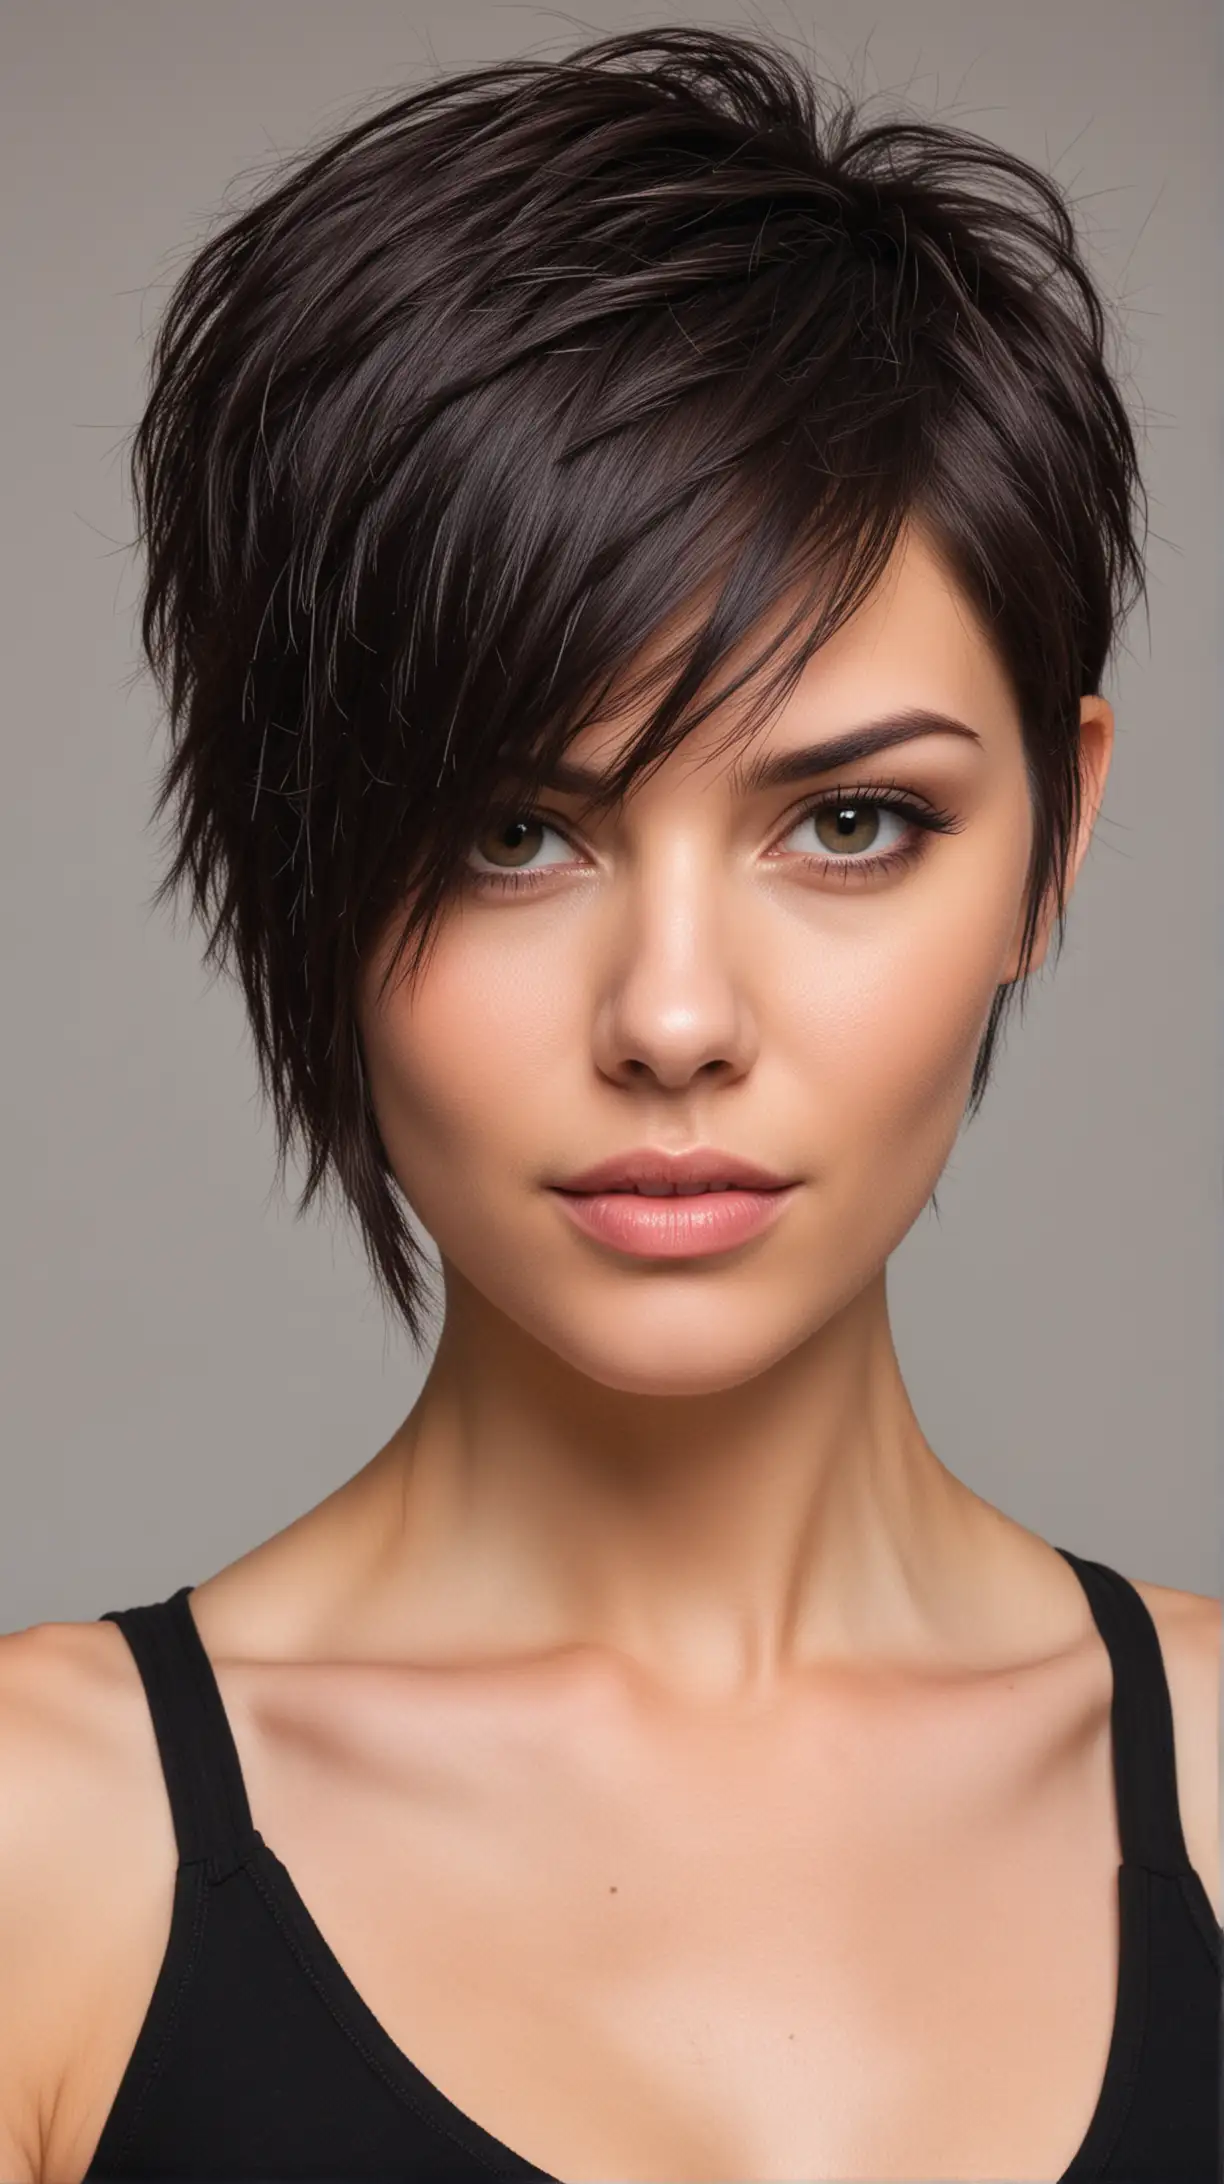 Beautiful girl model, haircut - Edgy Asymmetrical Cut, Medium hair, age 30 years old